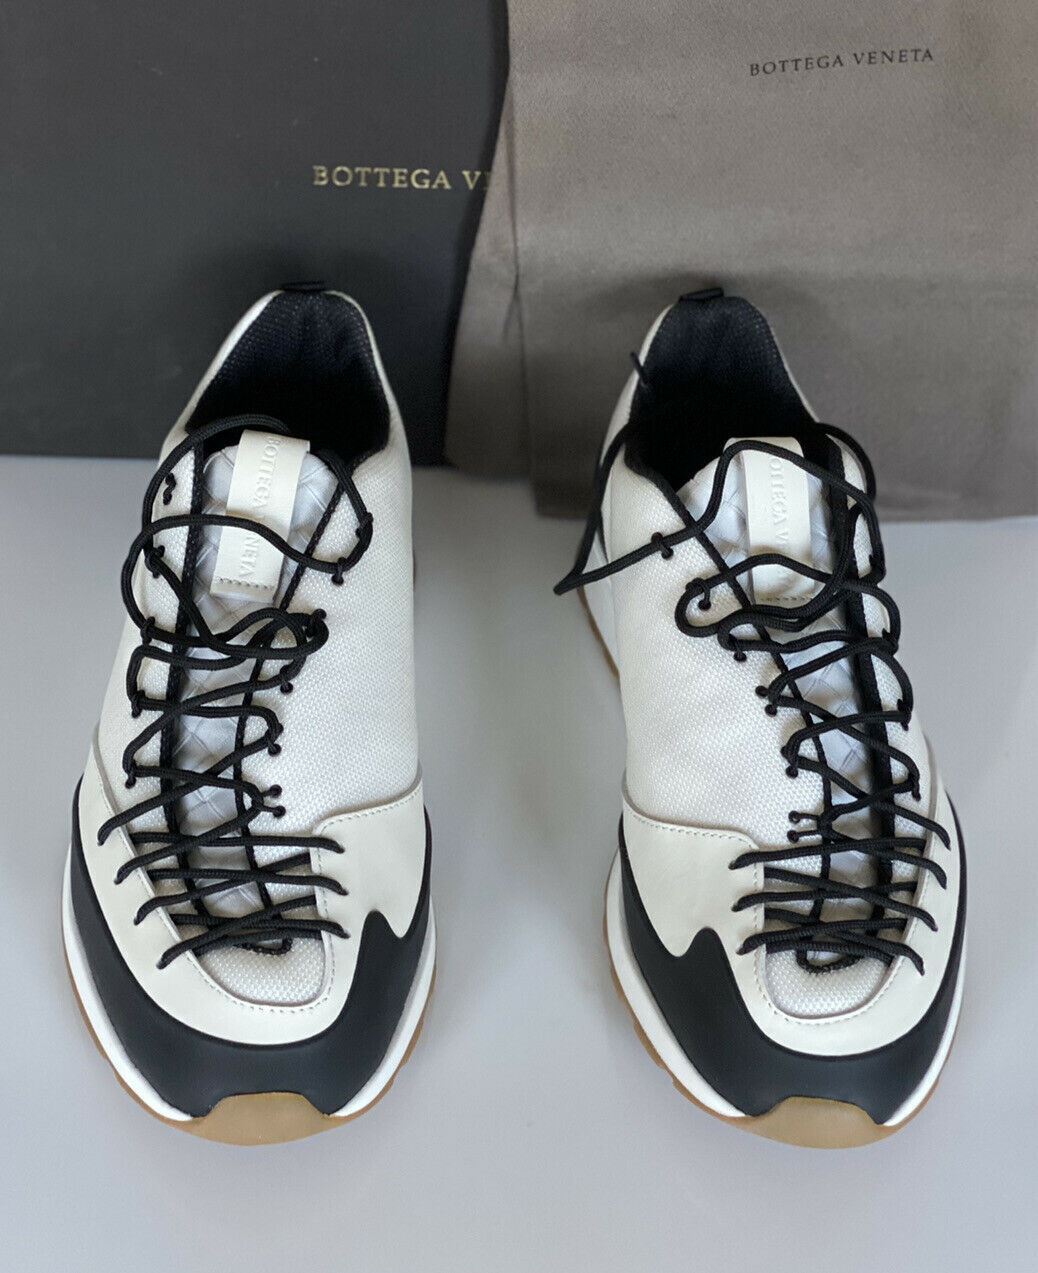 NIB 790 долларов США Bottega Veneta Мужские белые кроссовки Scar Tex 10 США (43 евро) 609891 